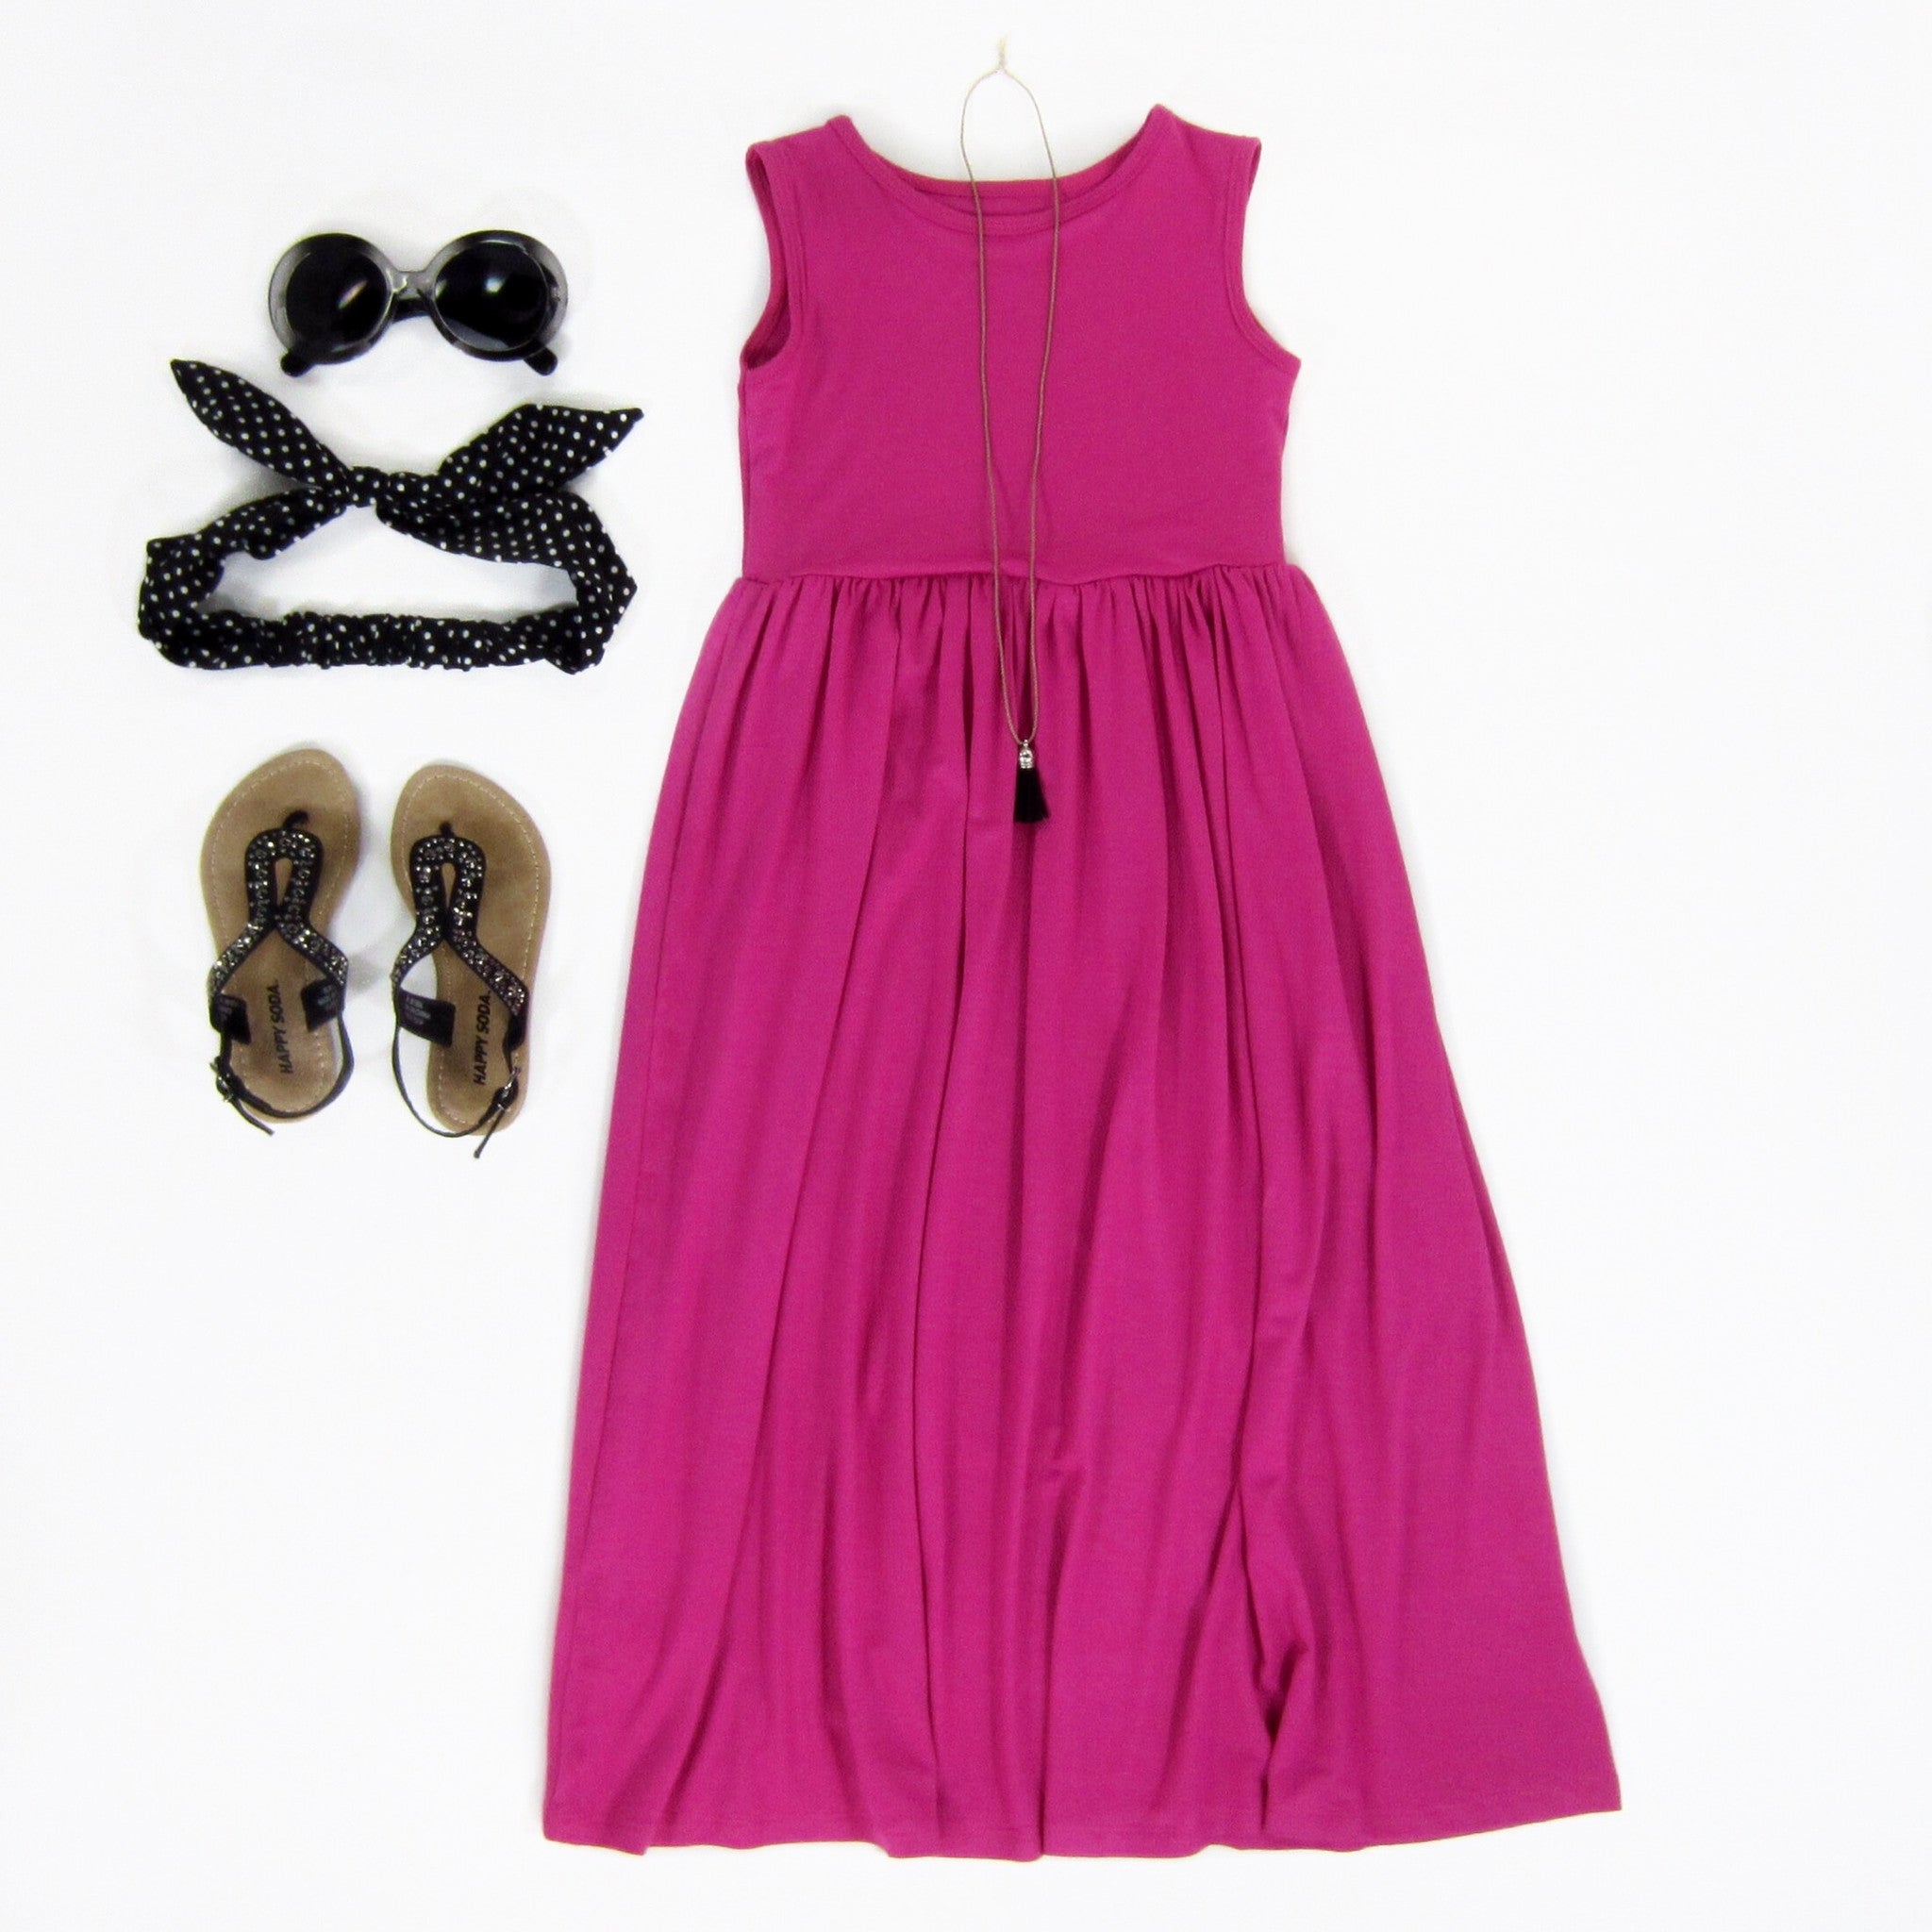 pink sleeveless maxi dress